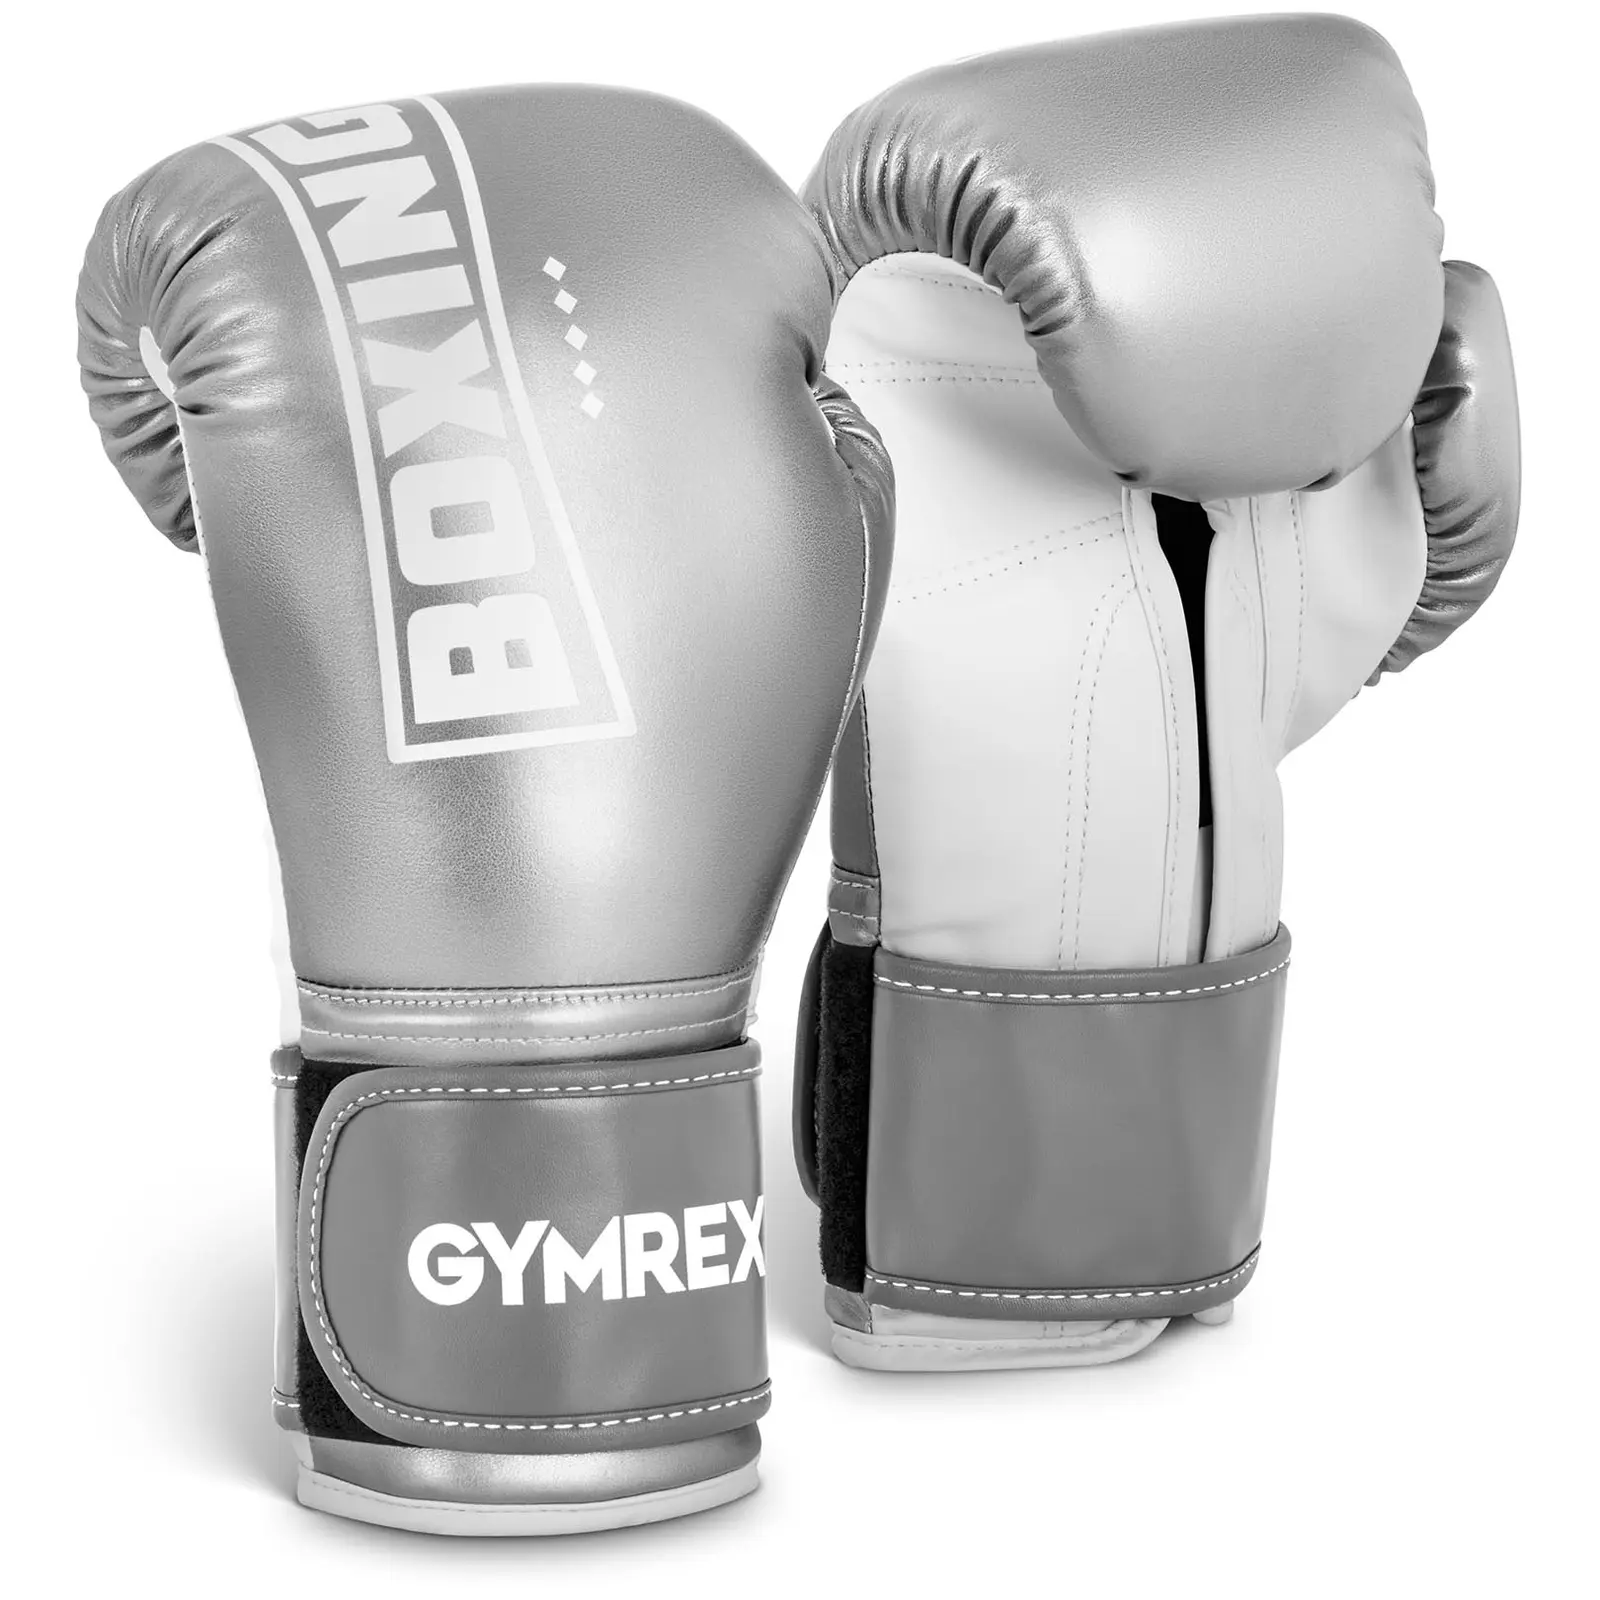 Boxing Gloves - 12 oz - metallic silver and white